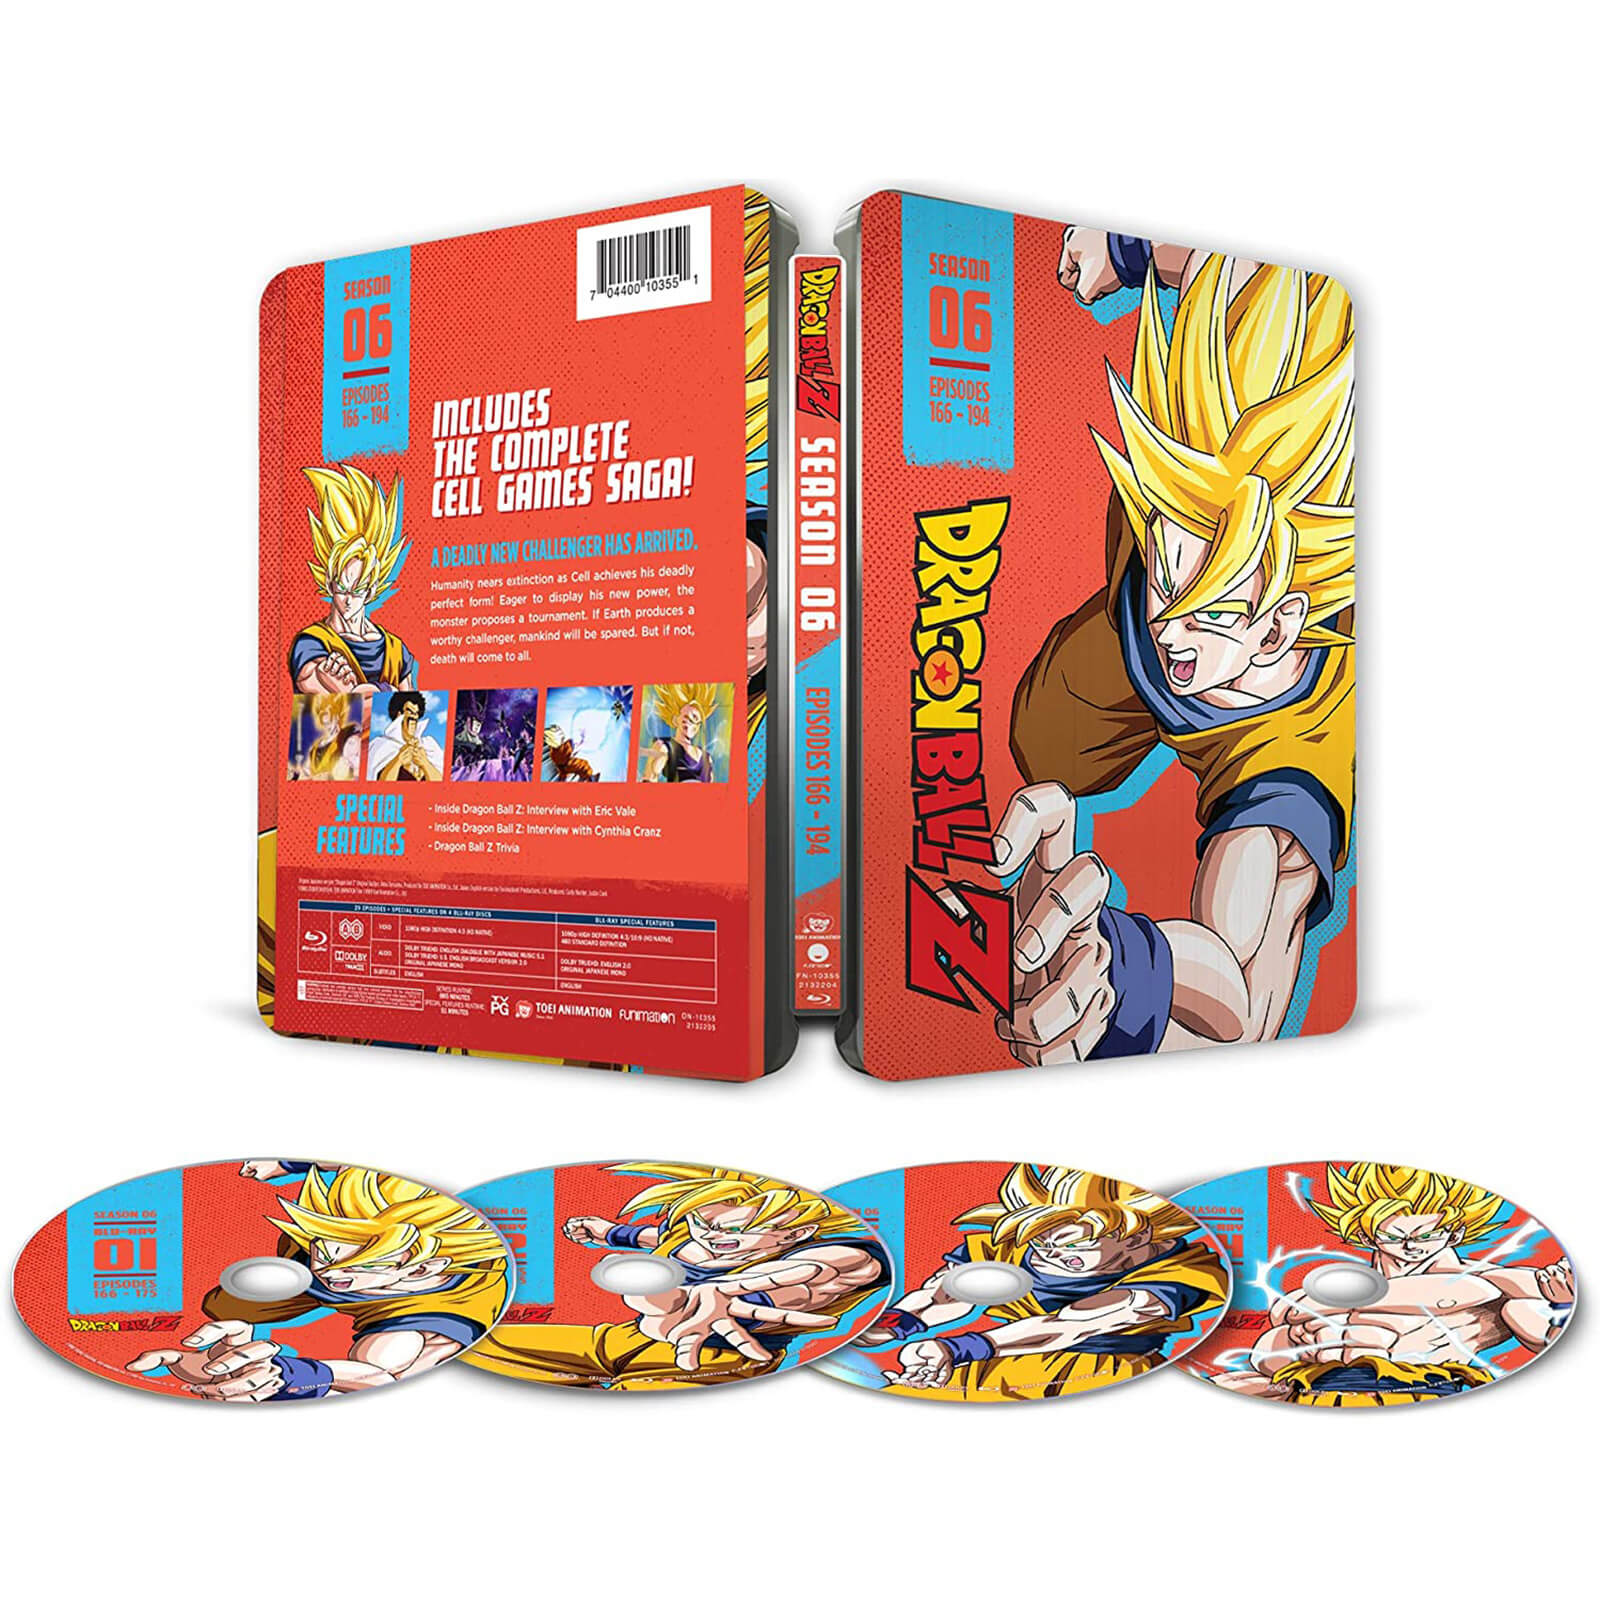 Dragon Ball Z: Season 6 - Limited Edition Steelbook